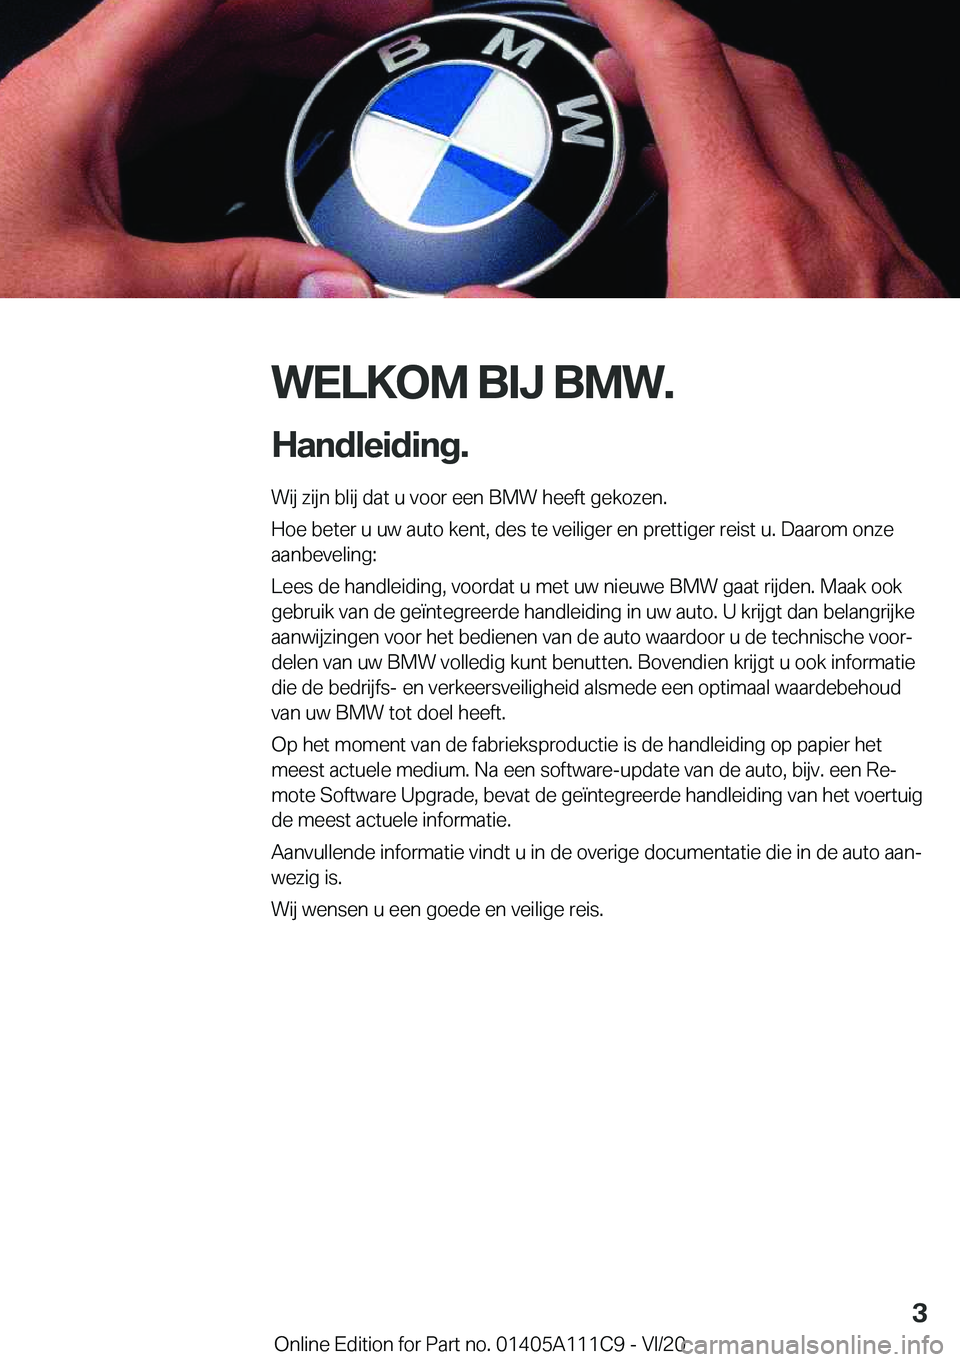 BMW 3 SERIES SEDAN PLUG-IN HYBRID 2021  Instructieboekjes (in Dutch) �W�E�L�K�O�M��B�I�J��B�M�W�.
�H�a�n�d�l�e�i�d�i�n�g�. �W�i�j��z�i�j�n��b�l�i�j��d�a�t��u��v�o�o�r��e�e�n��B�M�W��h�e�e�f�t��g�e�k�o�z�e�n�.
�H�o�e��b�e�t�e�r��u��u�w��a�u�t�o��k�e�n�t�